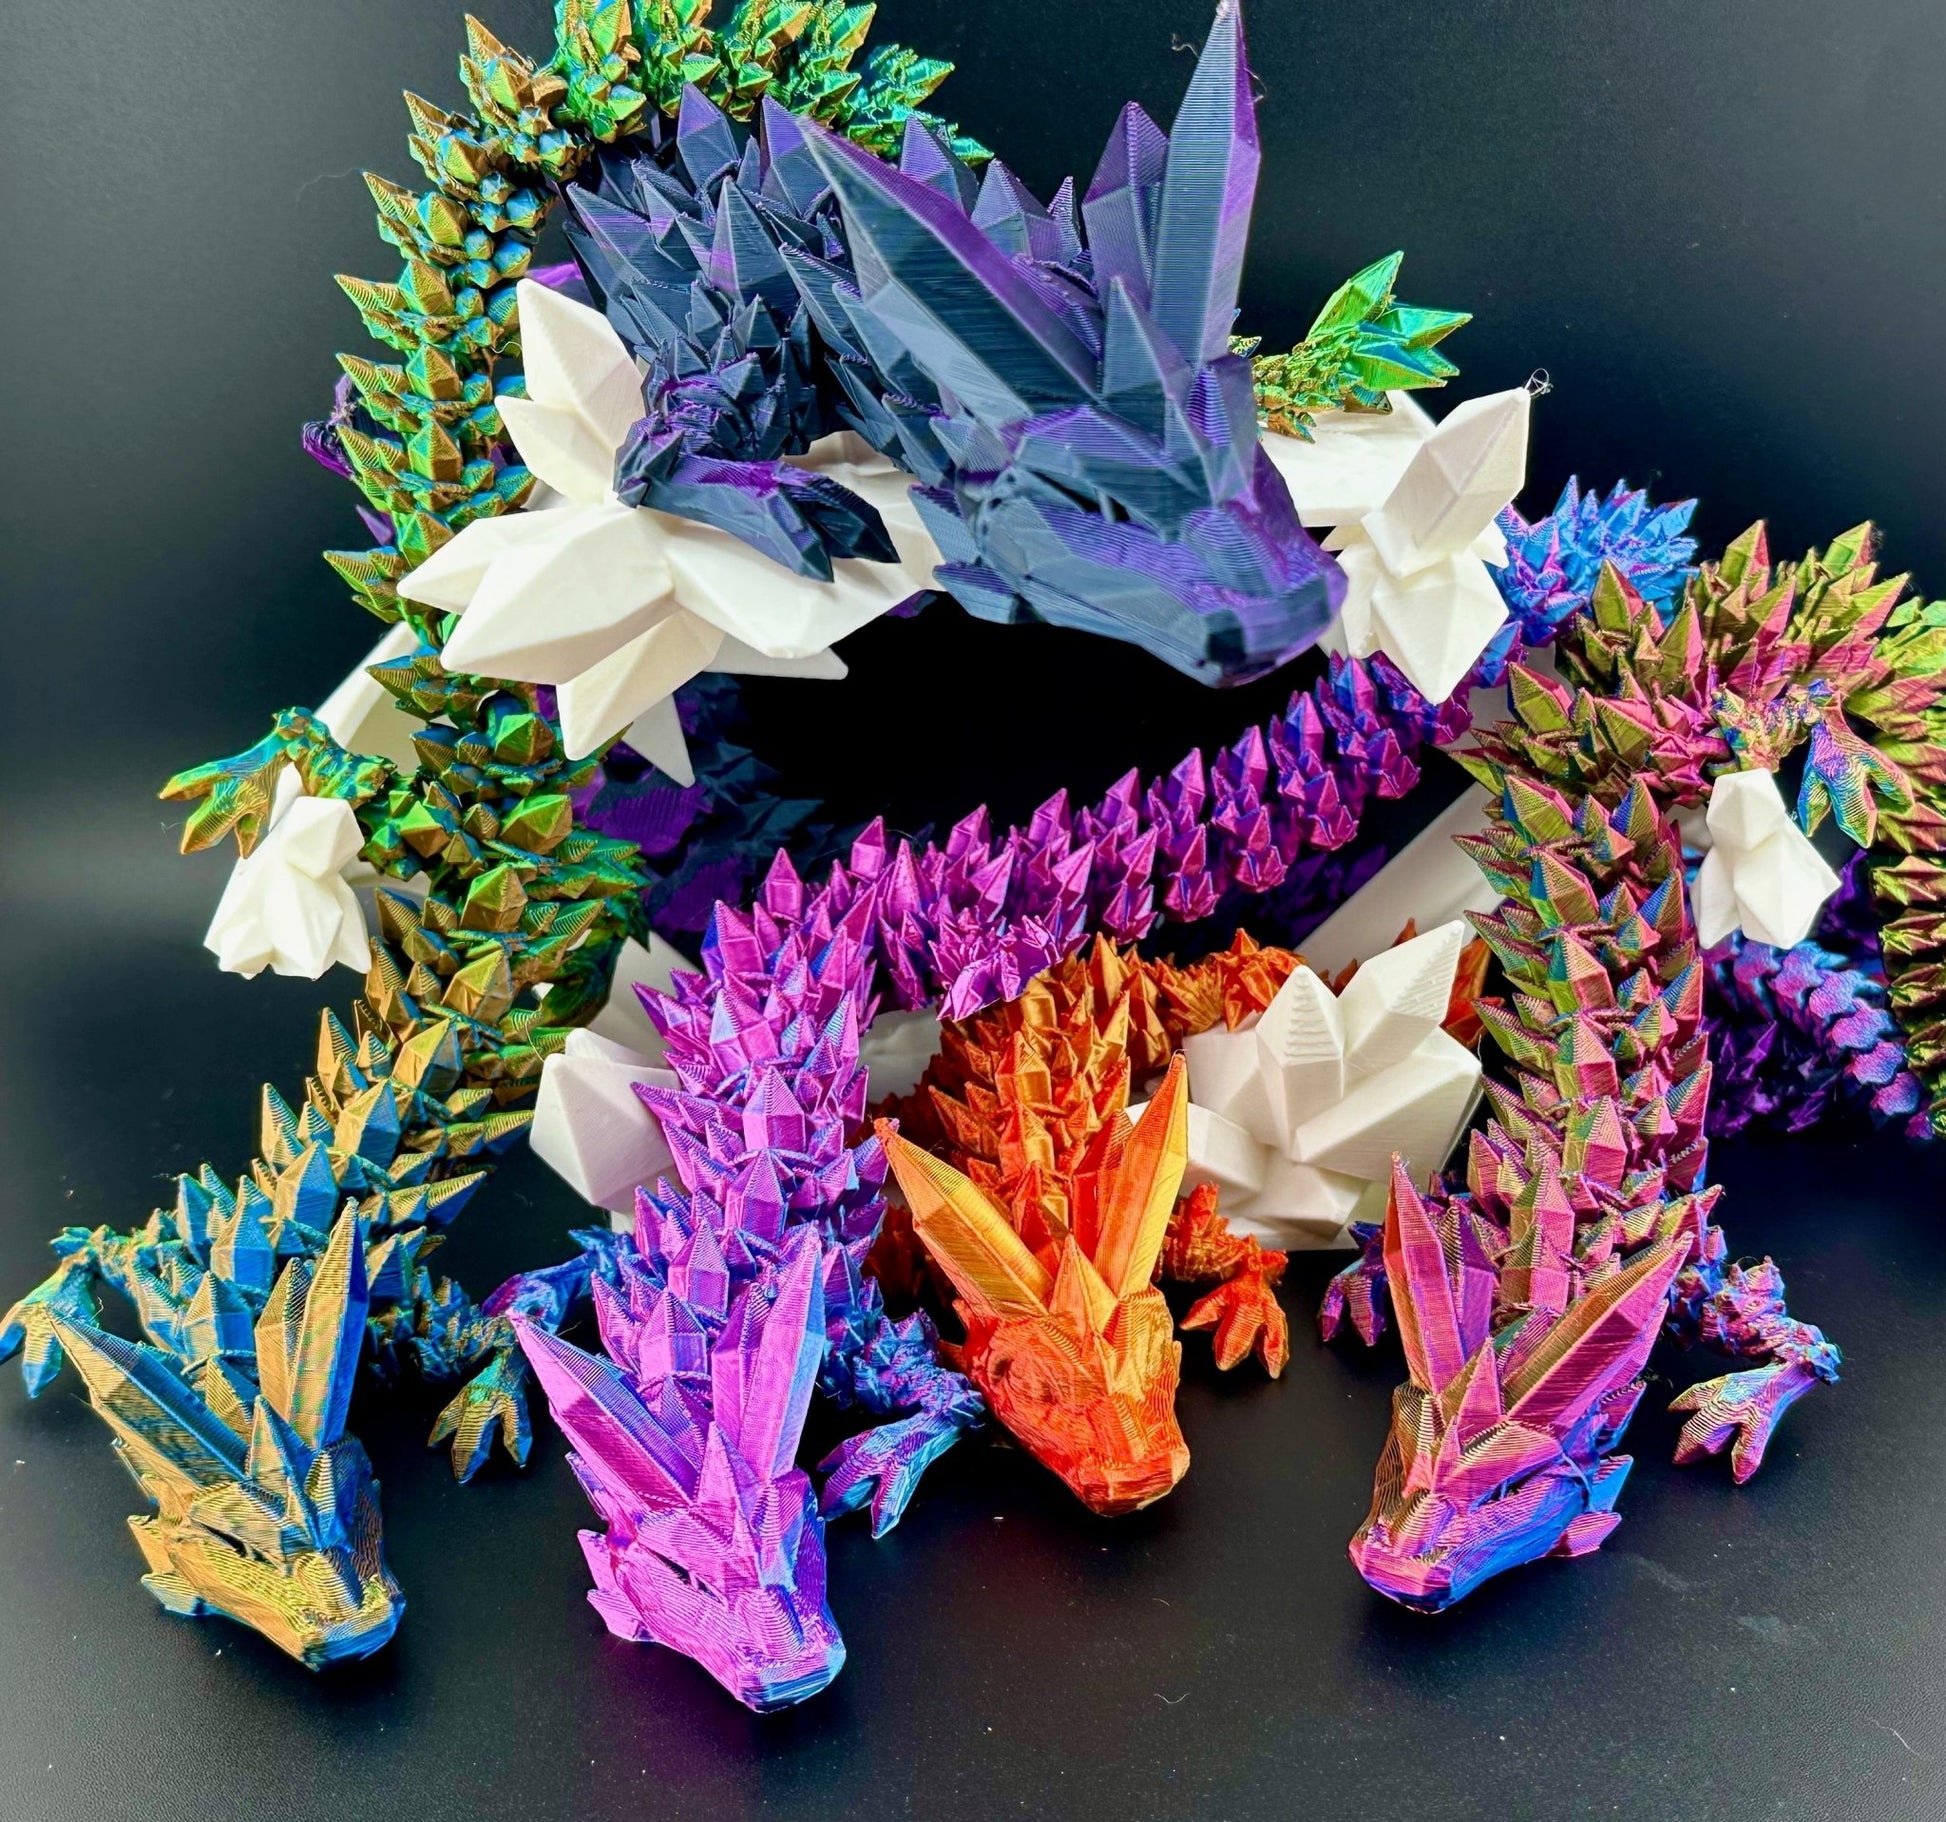 Crystal Dragon 3D Printed 24” Articulated Fidget Desktop Display